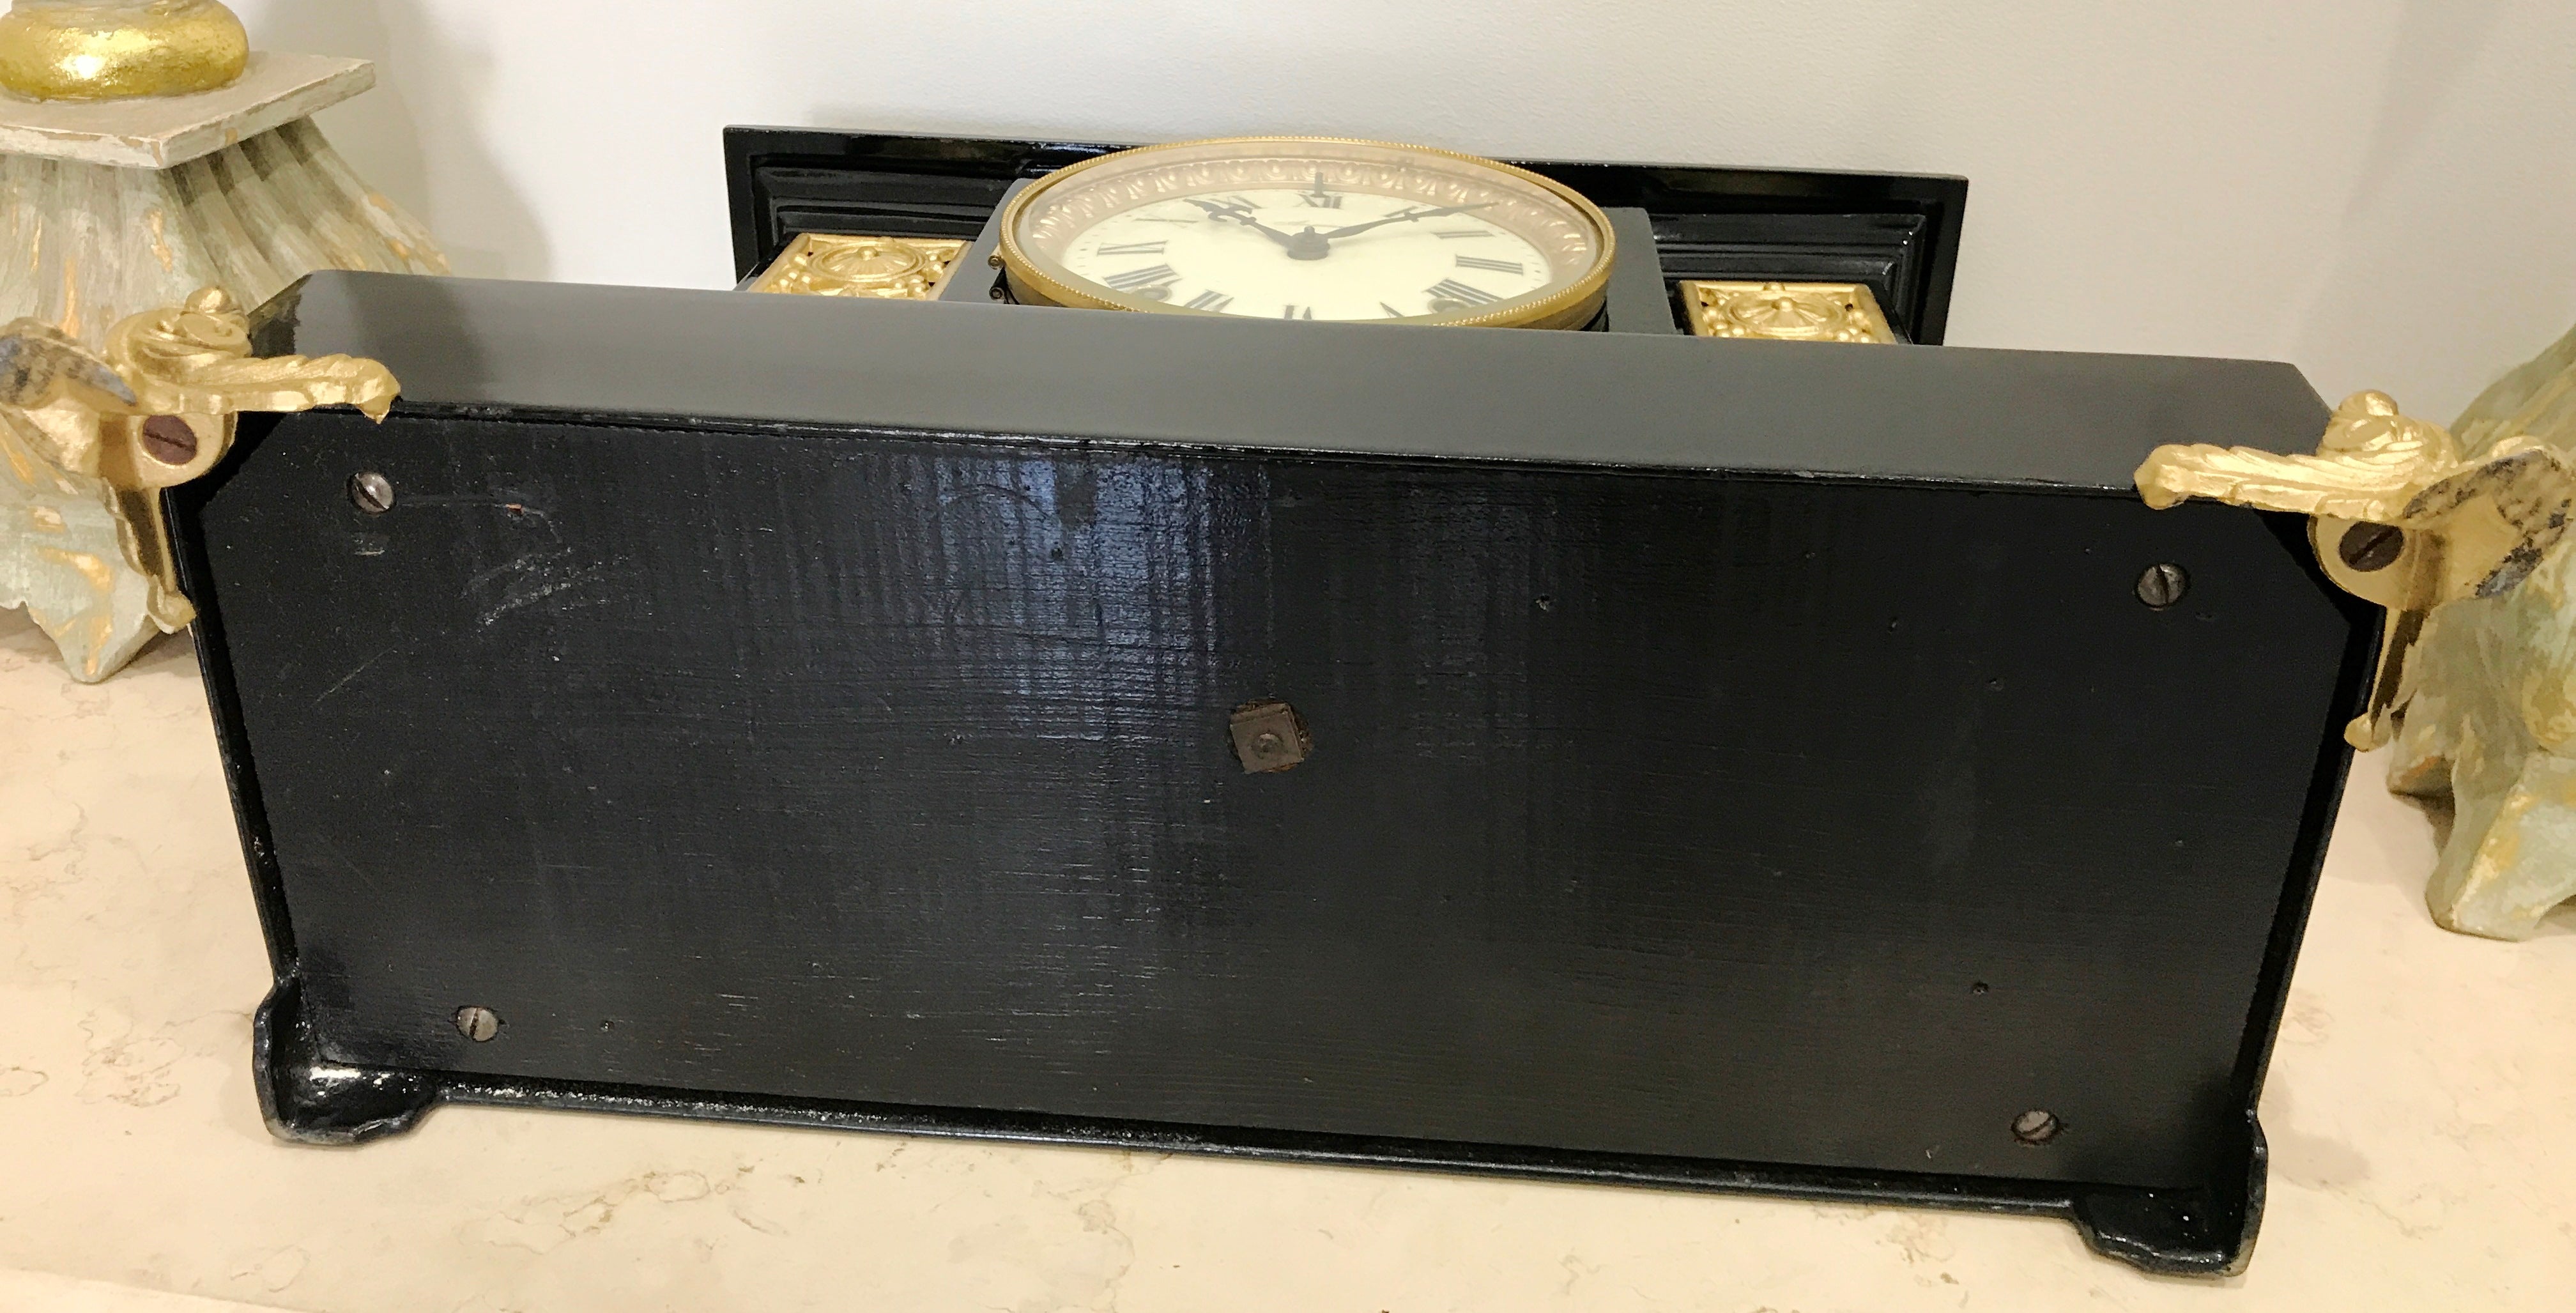 Antique ANSONIA Cast Iron Mantel Clock | eXibit collection